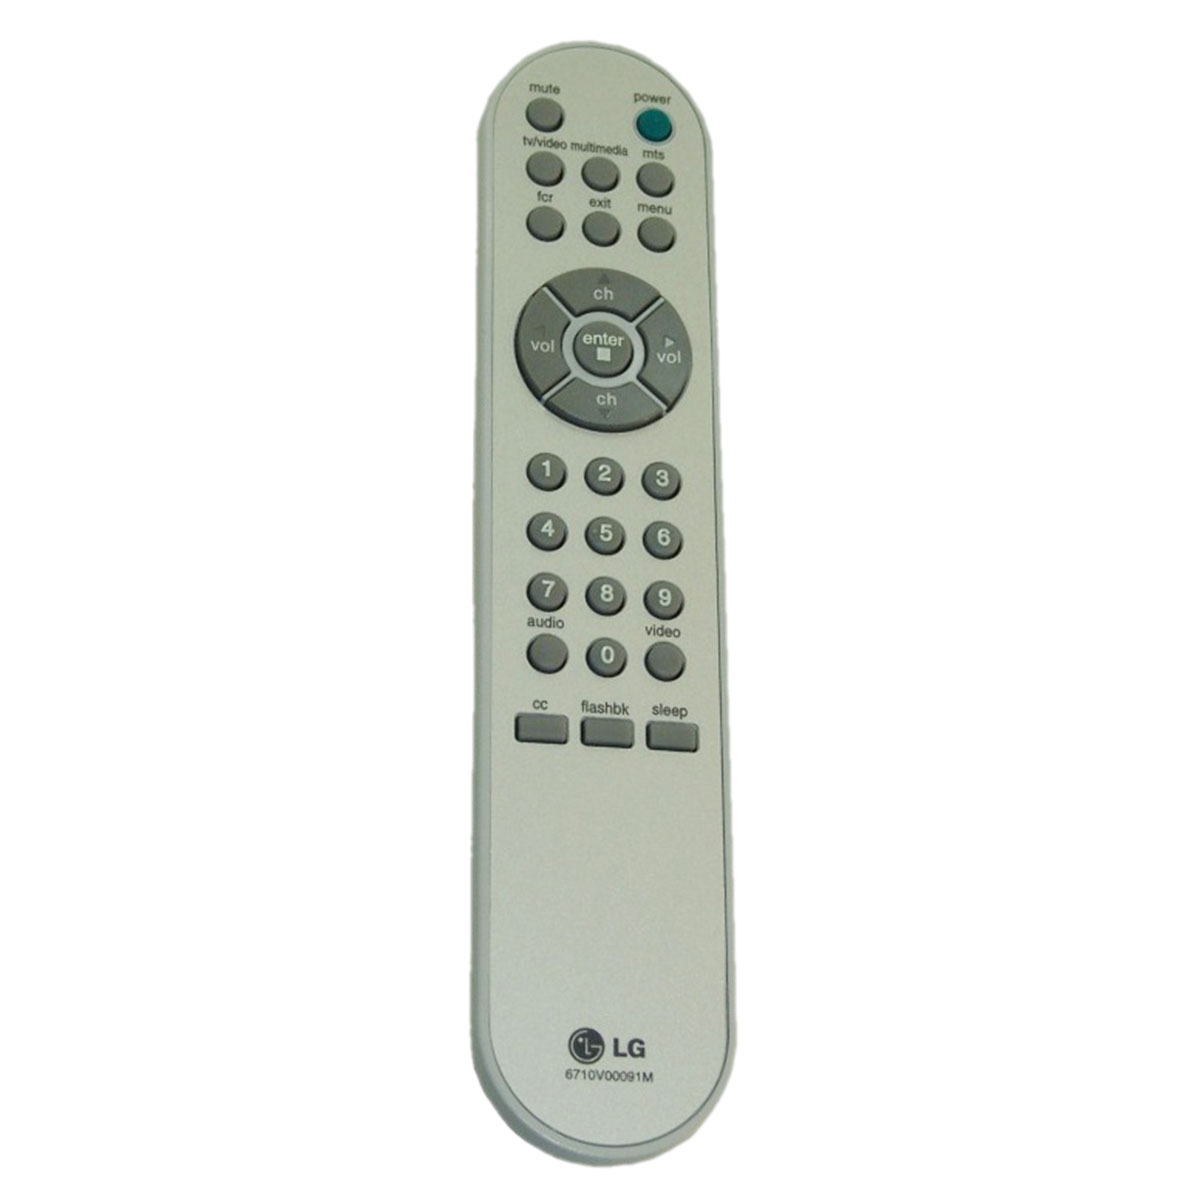 LG Original TV Remote Control for LG RU13LA60 Television